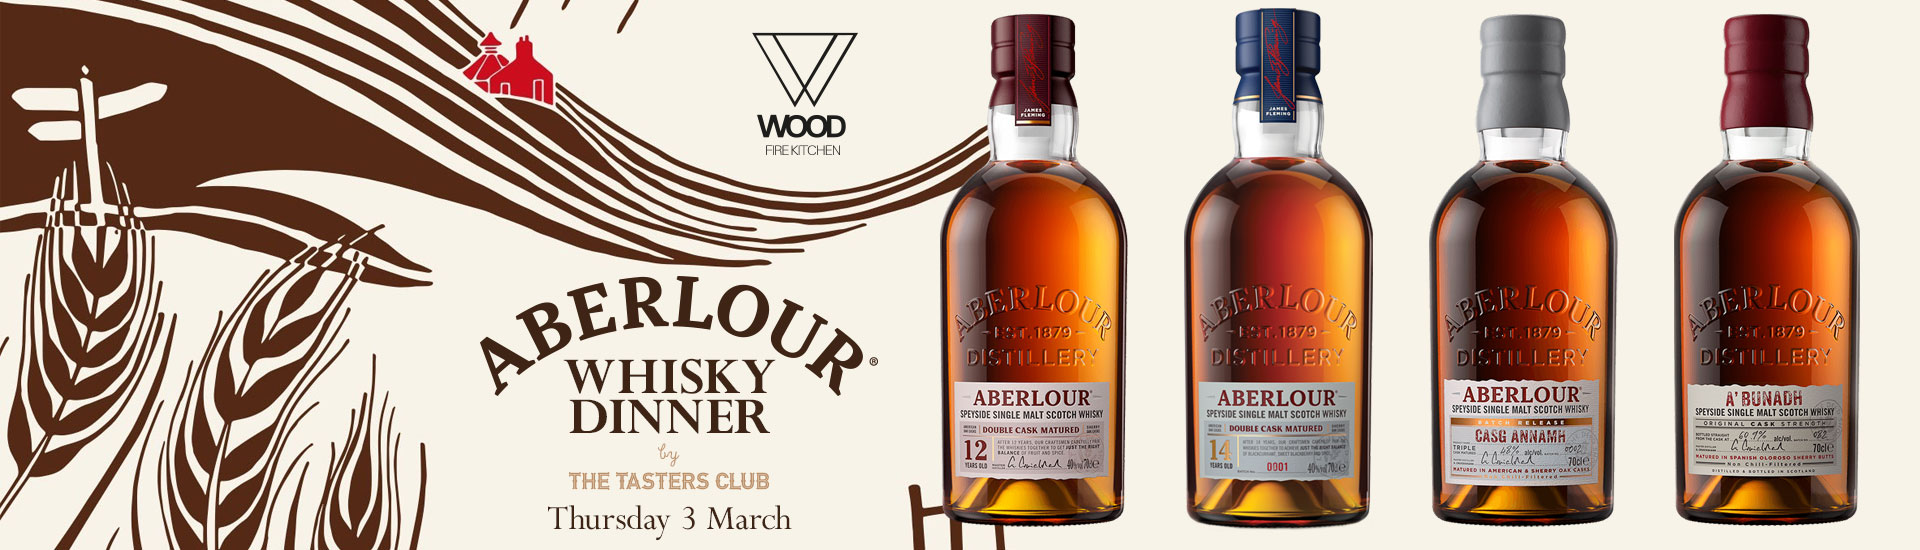 The Tasters Club Aberlour whisky dinner